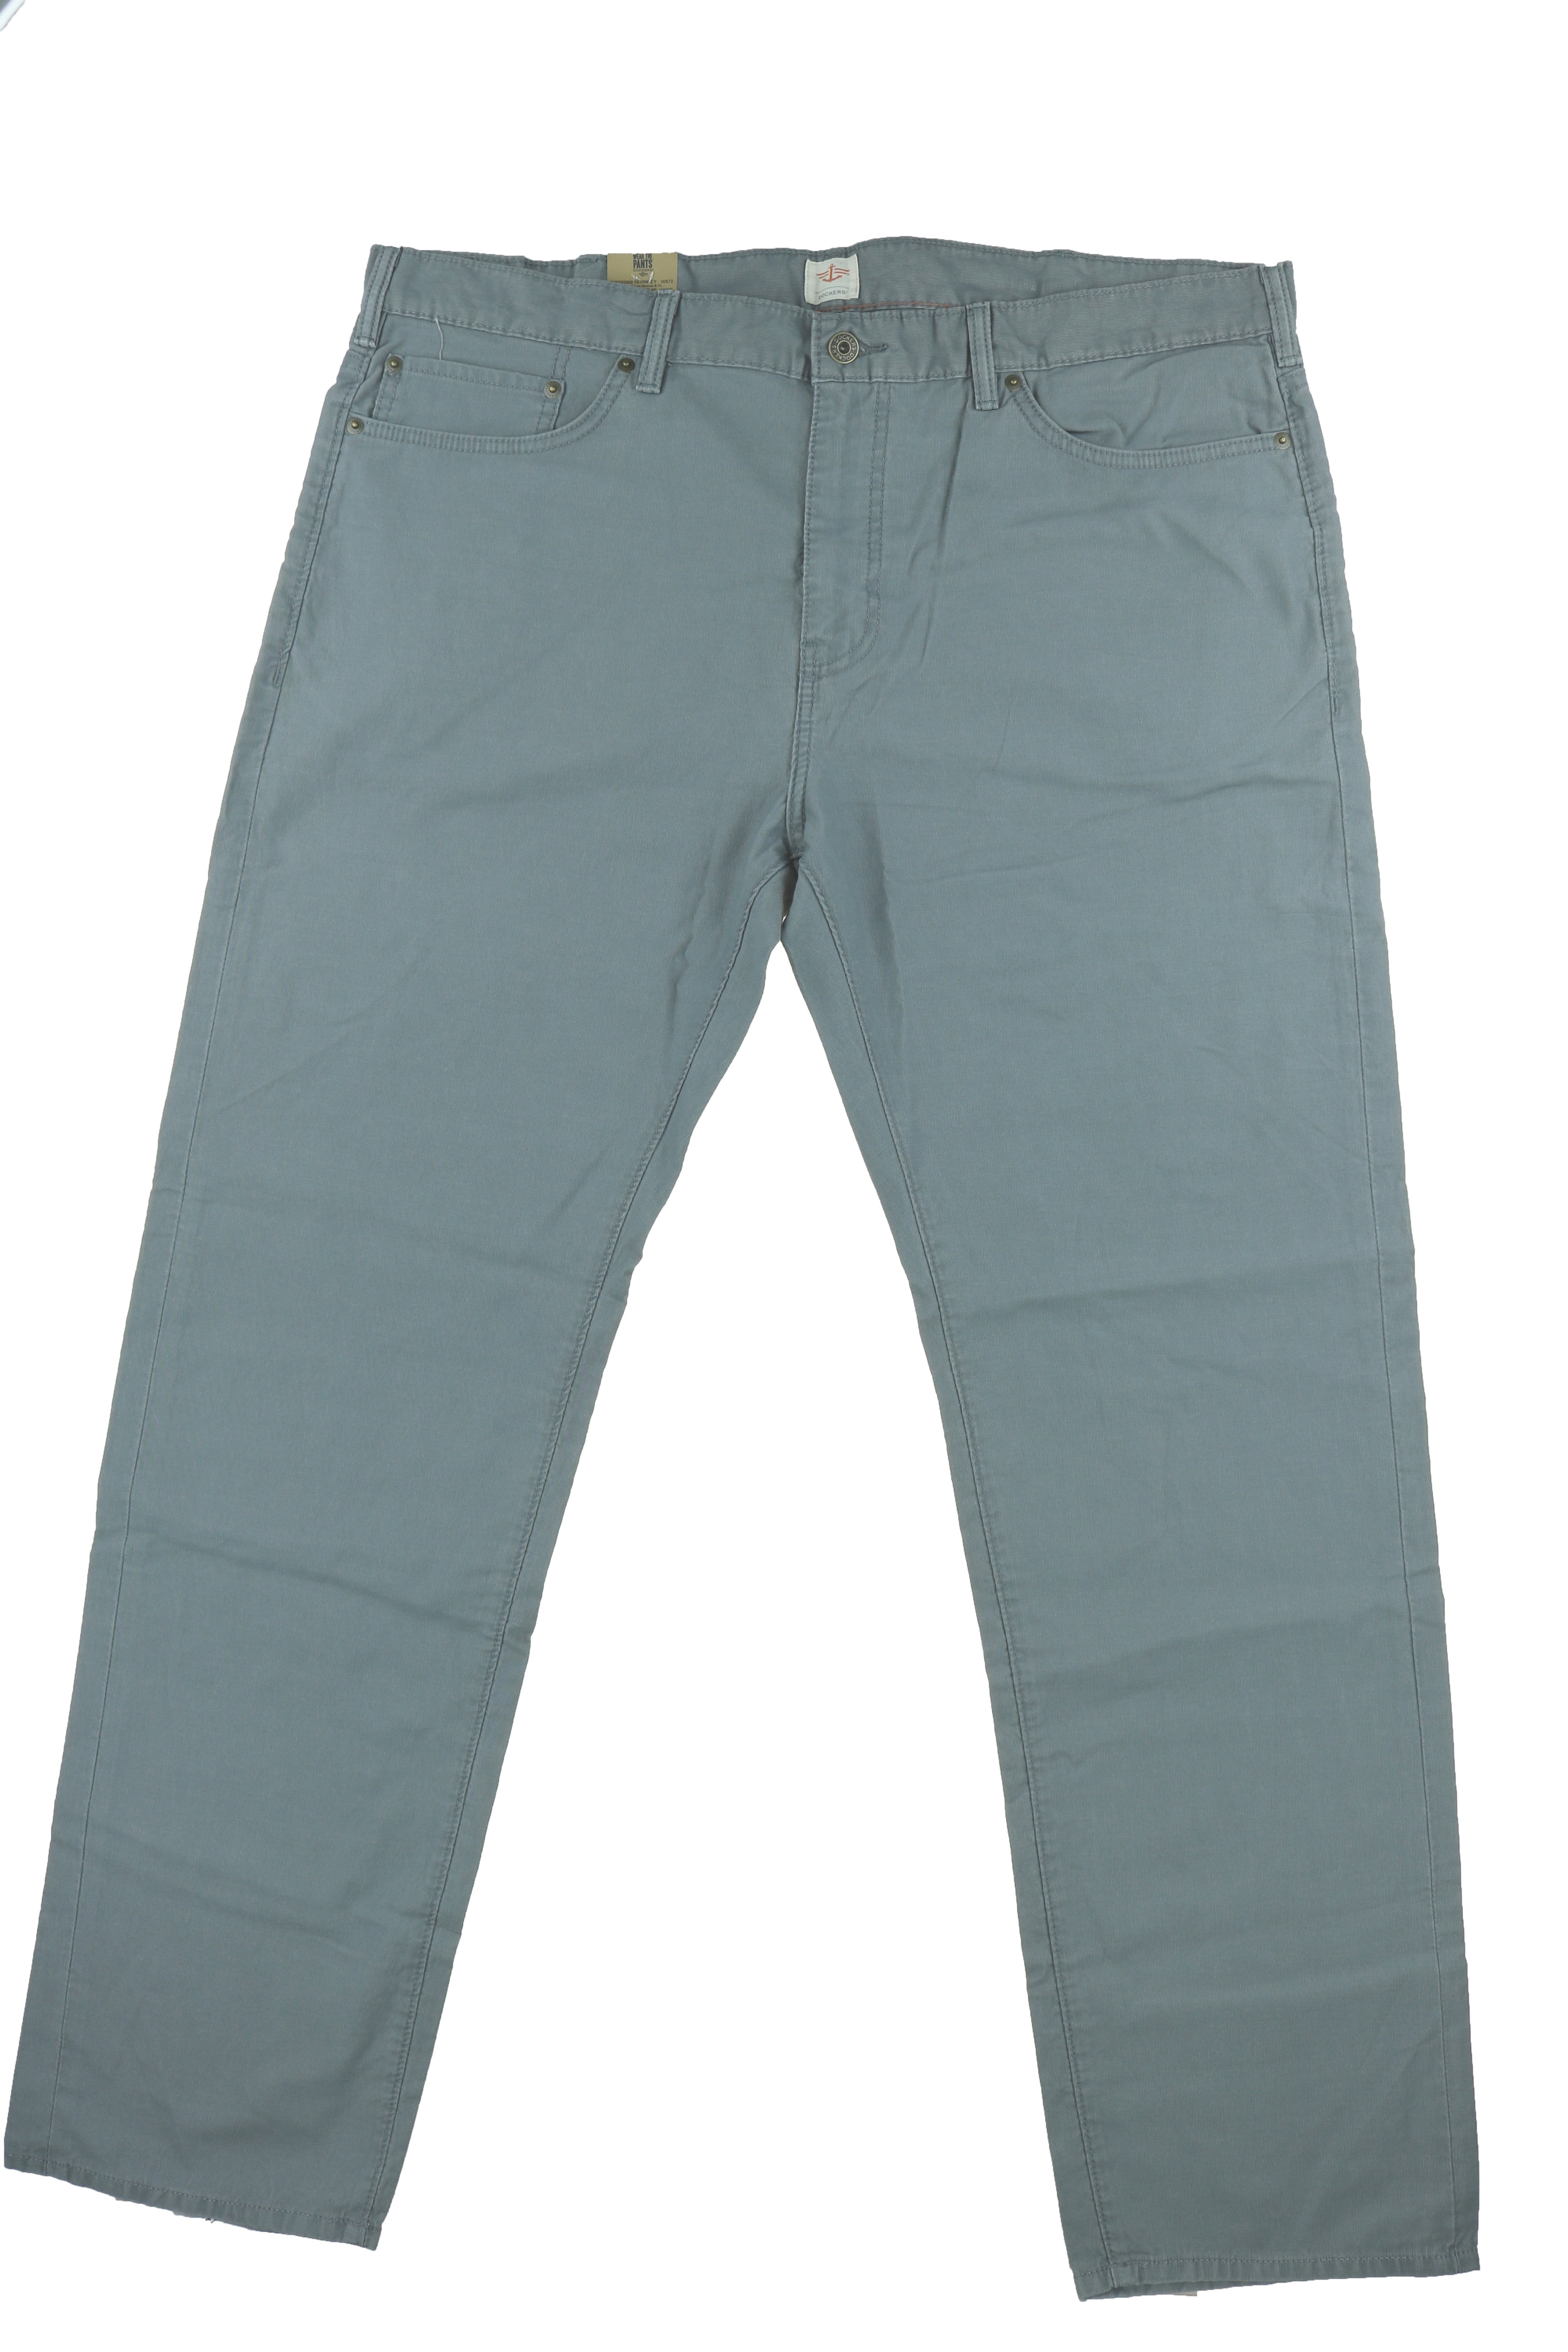 zonlicht Wat mensen betreft Lyrisch Dockers Pacific Collection Mens 5-Pocket Straight Fit Pants (Khaki, 36X32)  - Walmart.com